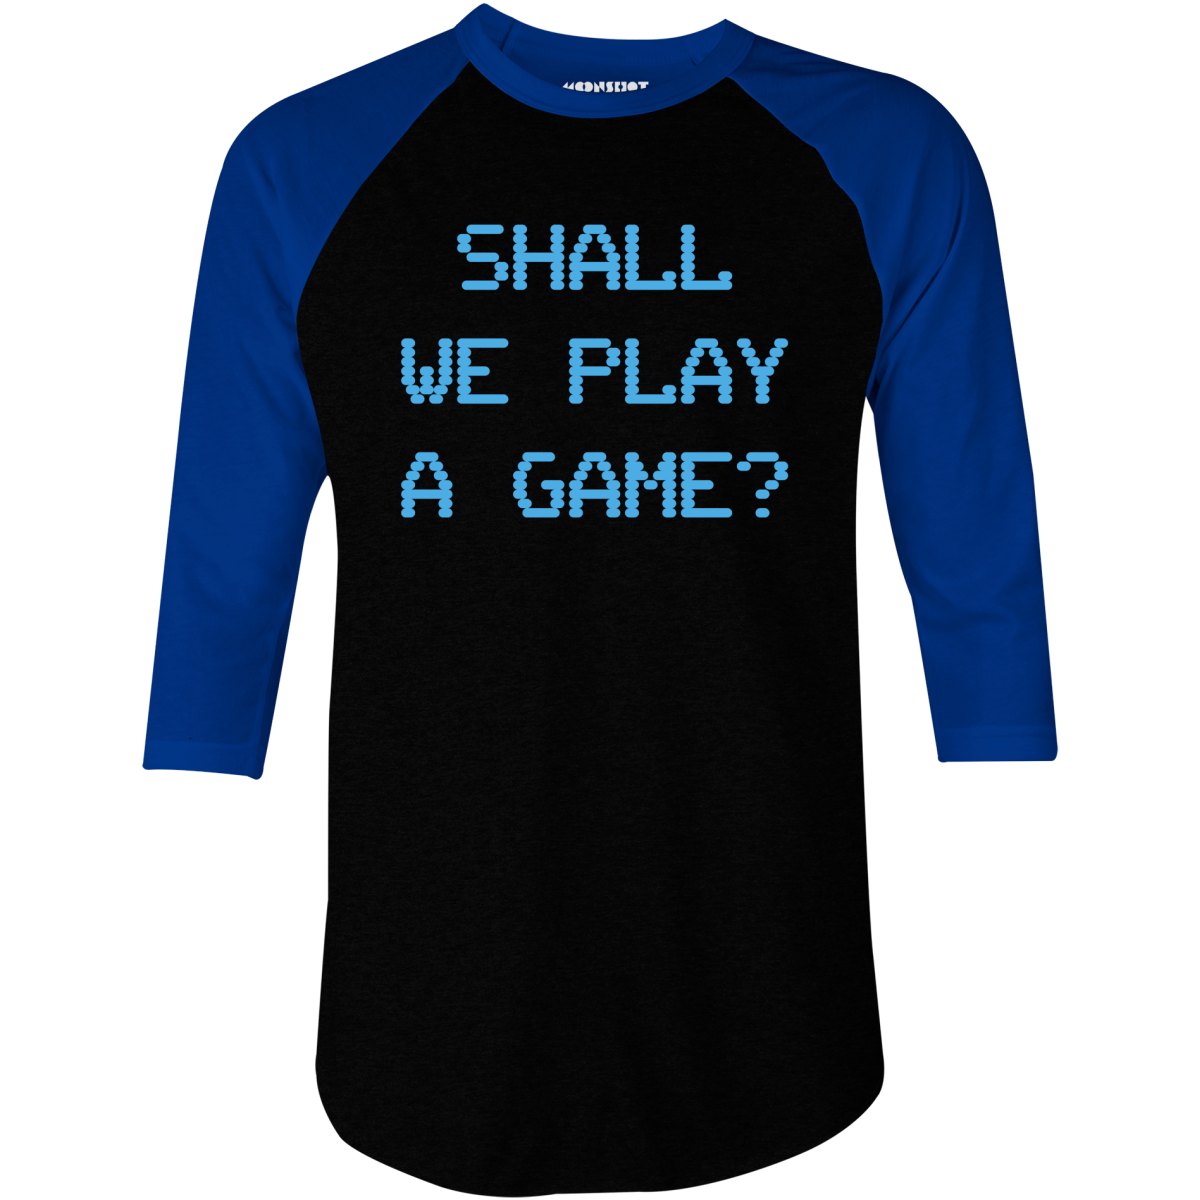 Shall We Play a Game? - 3/4 Sleeve Raglan T-Shirt